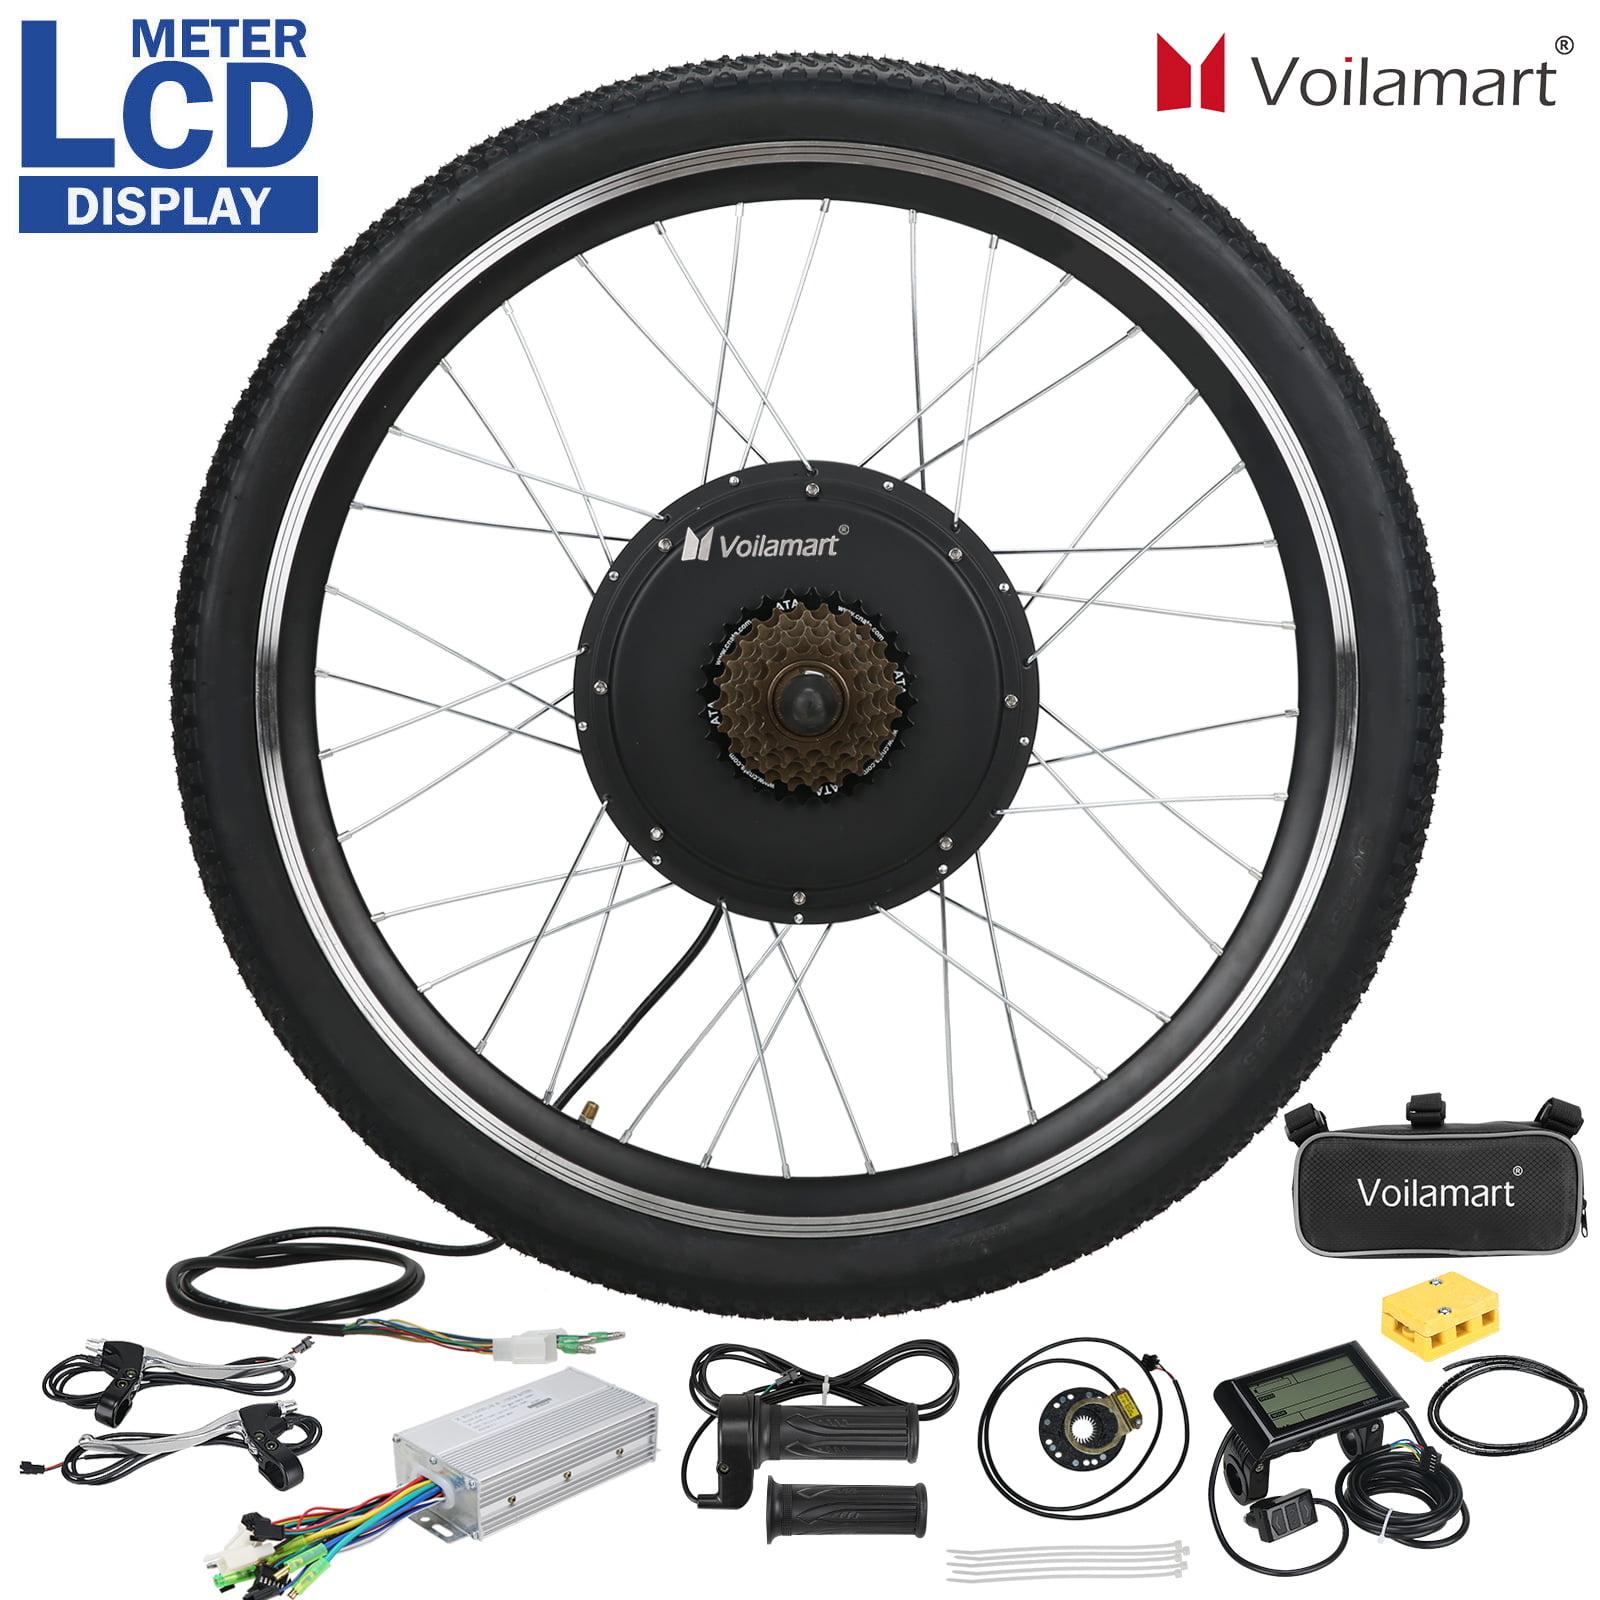 Waterproof 48V 1000W Electric Bicycle Conversion Kit 26" Rear Wheel LCD Meter